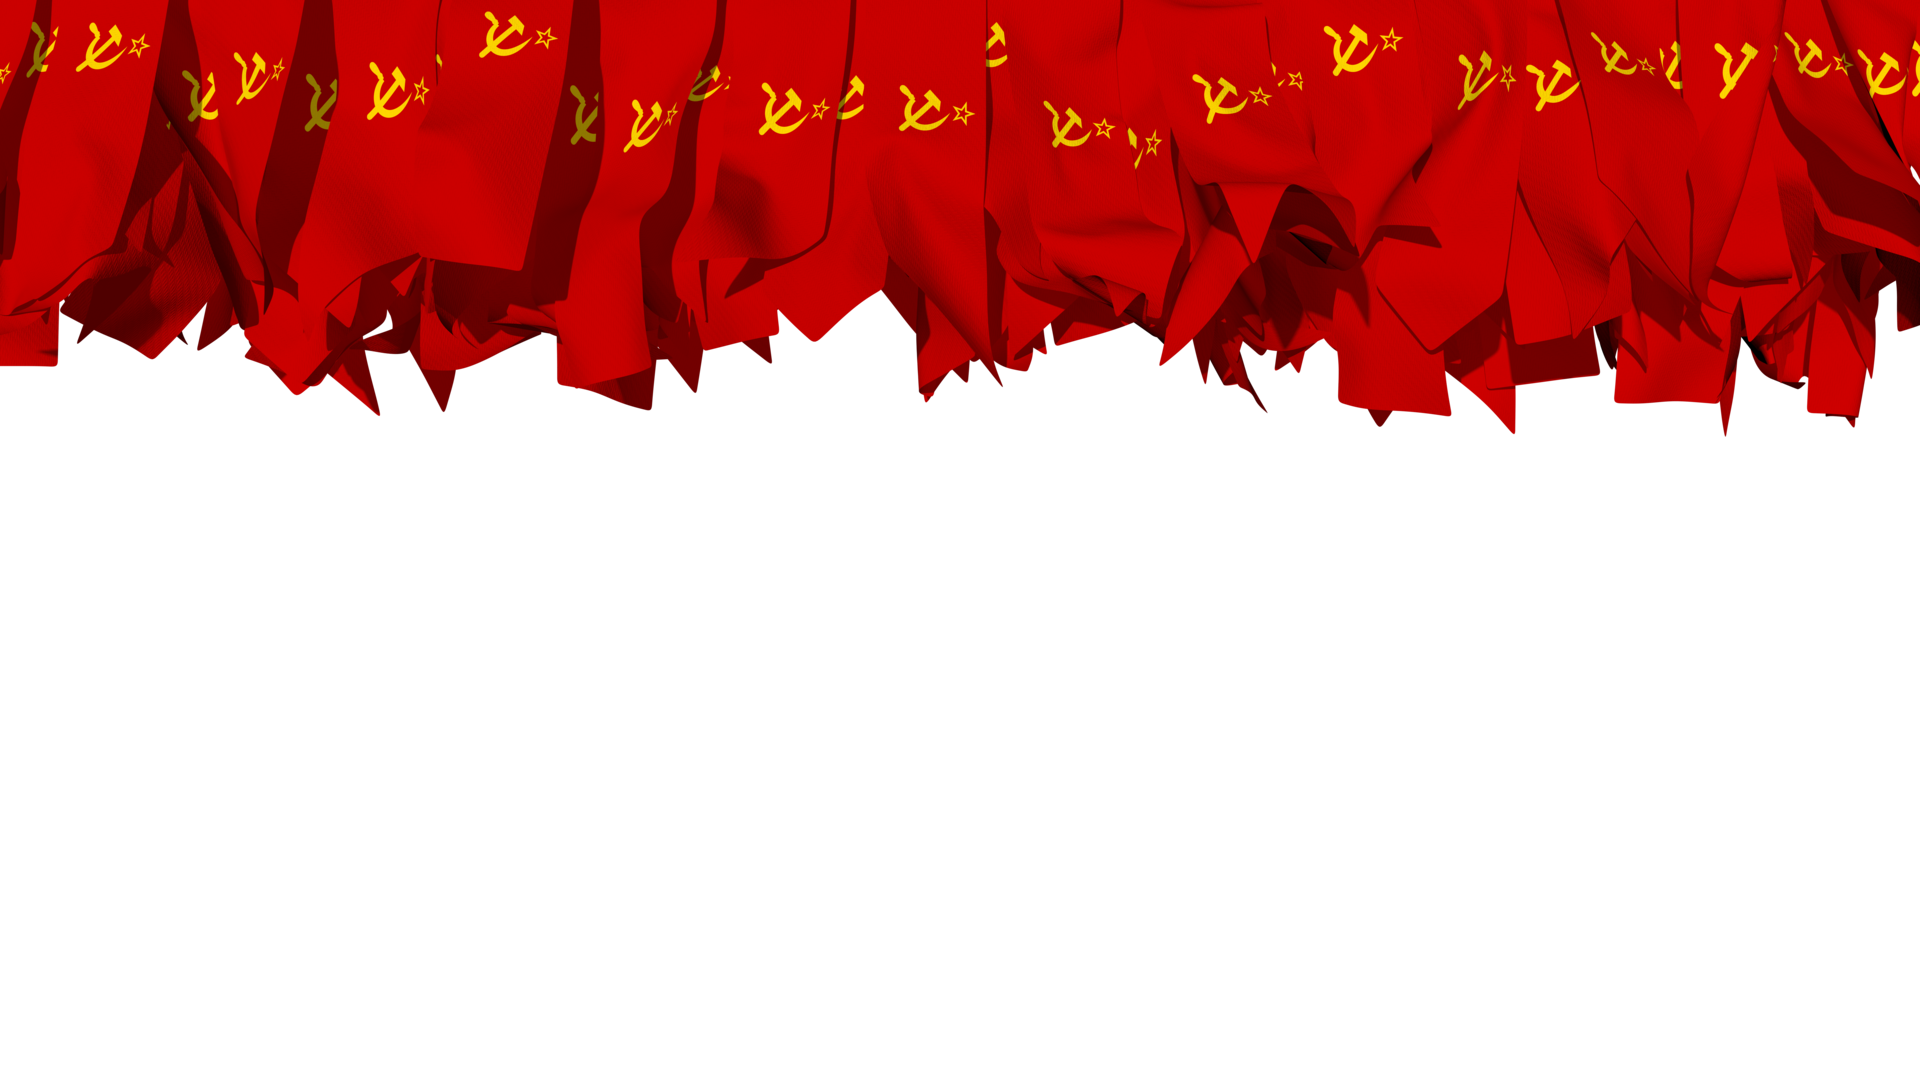 Soviet Star Union | Soviet Star Union Wiki | Fandom